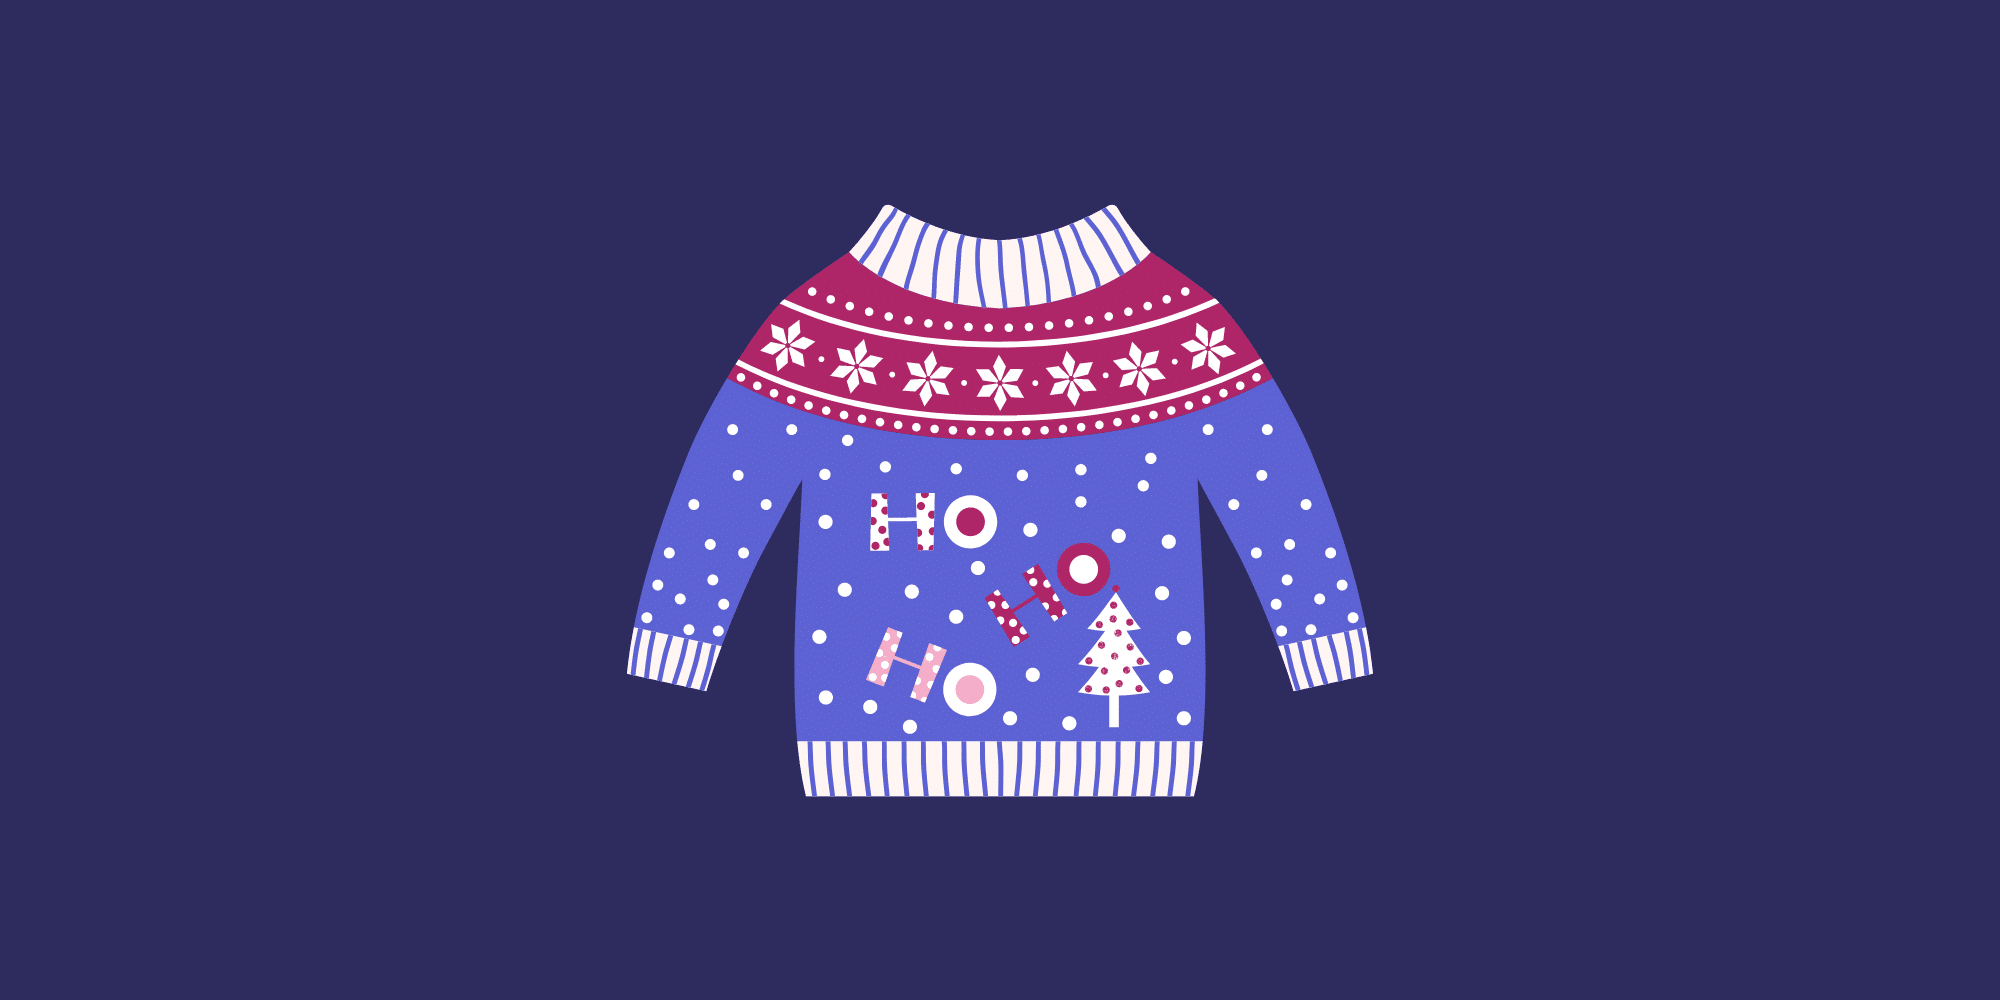 ugly-christmas-sweaters